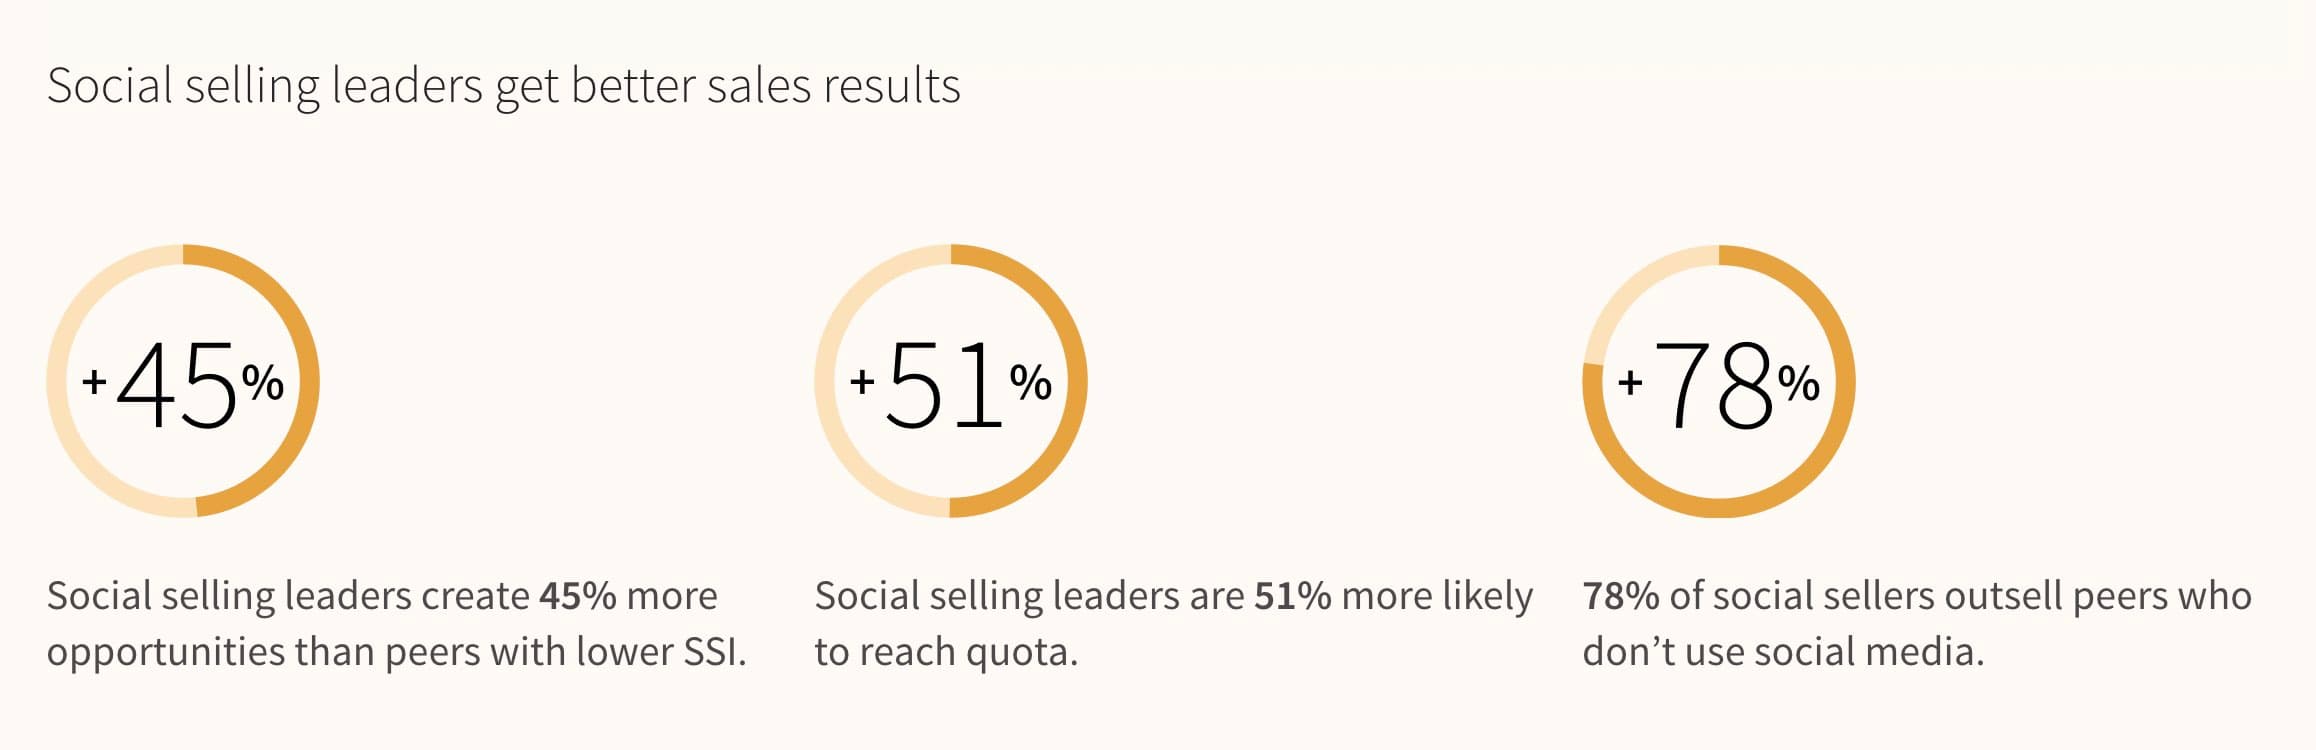 Social selling strategies, statistics for success in social selling